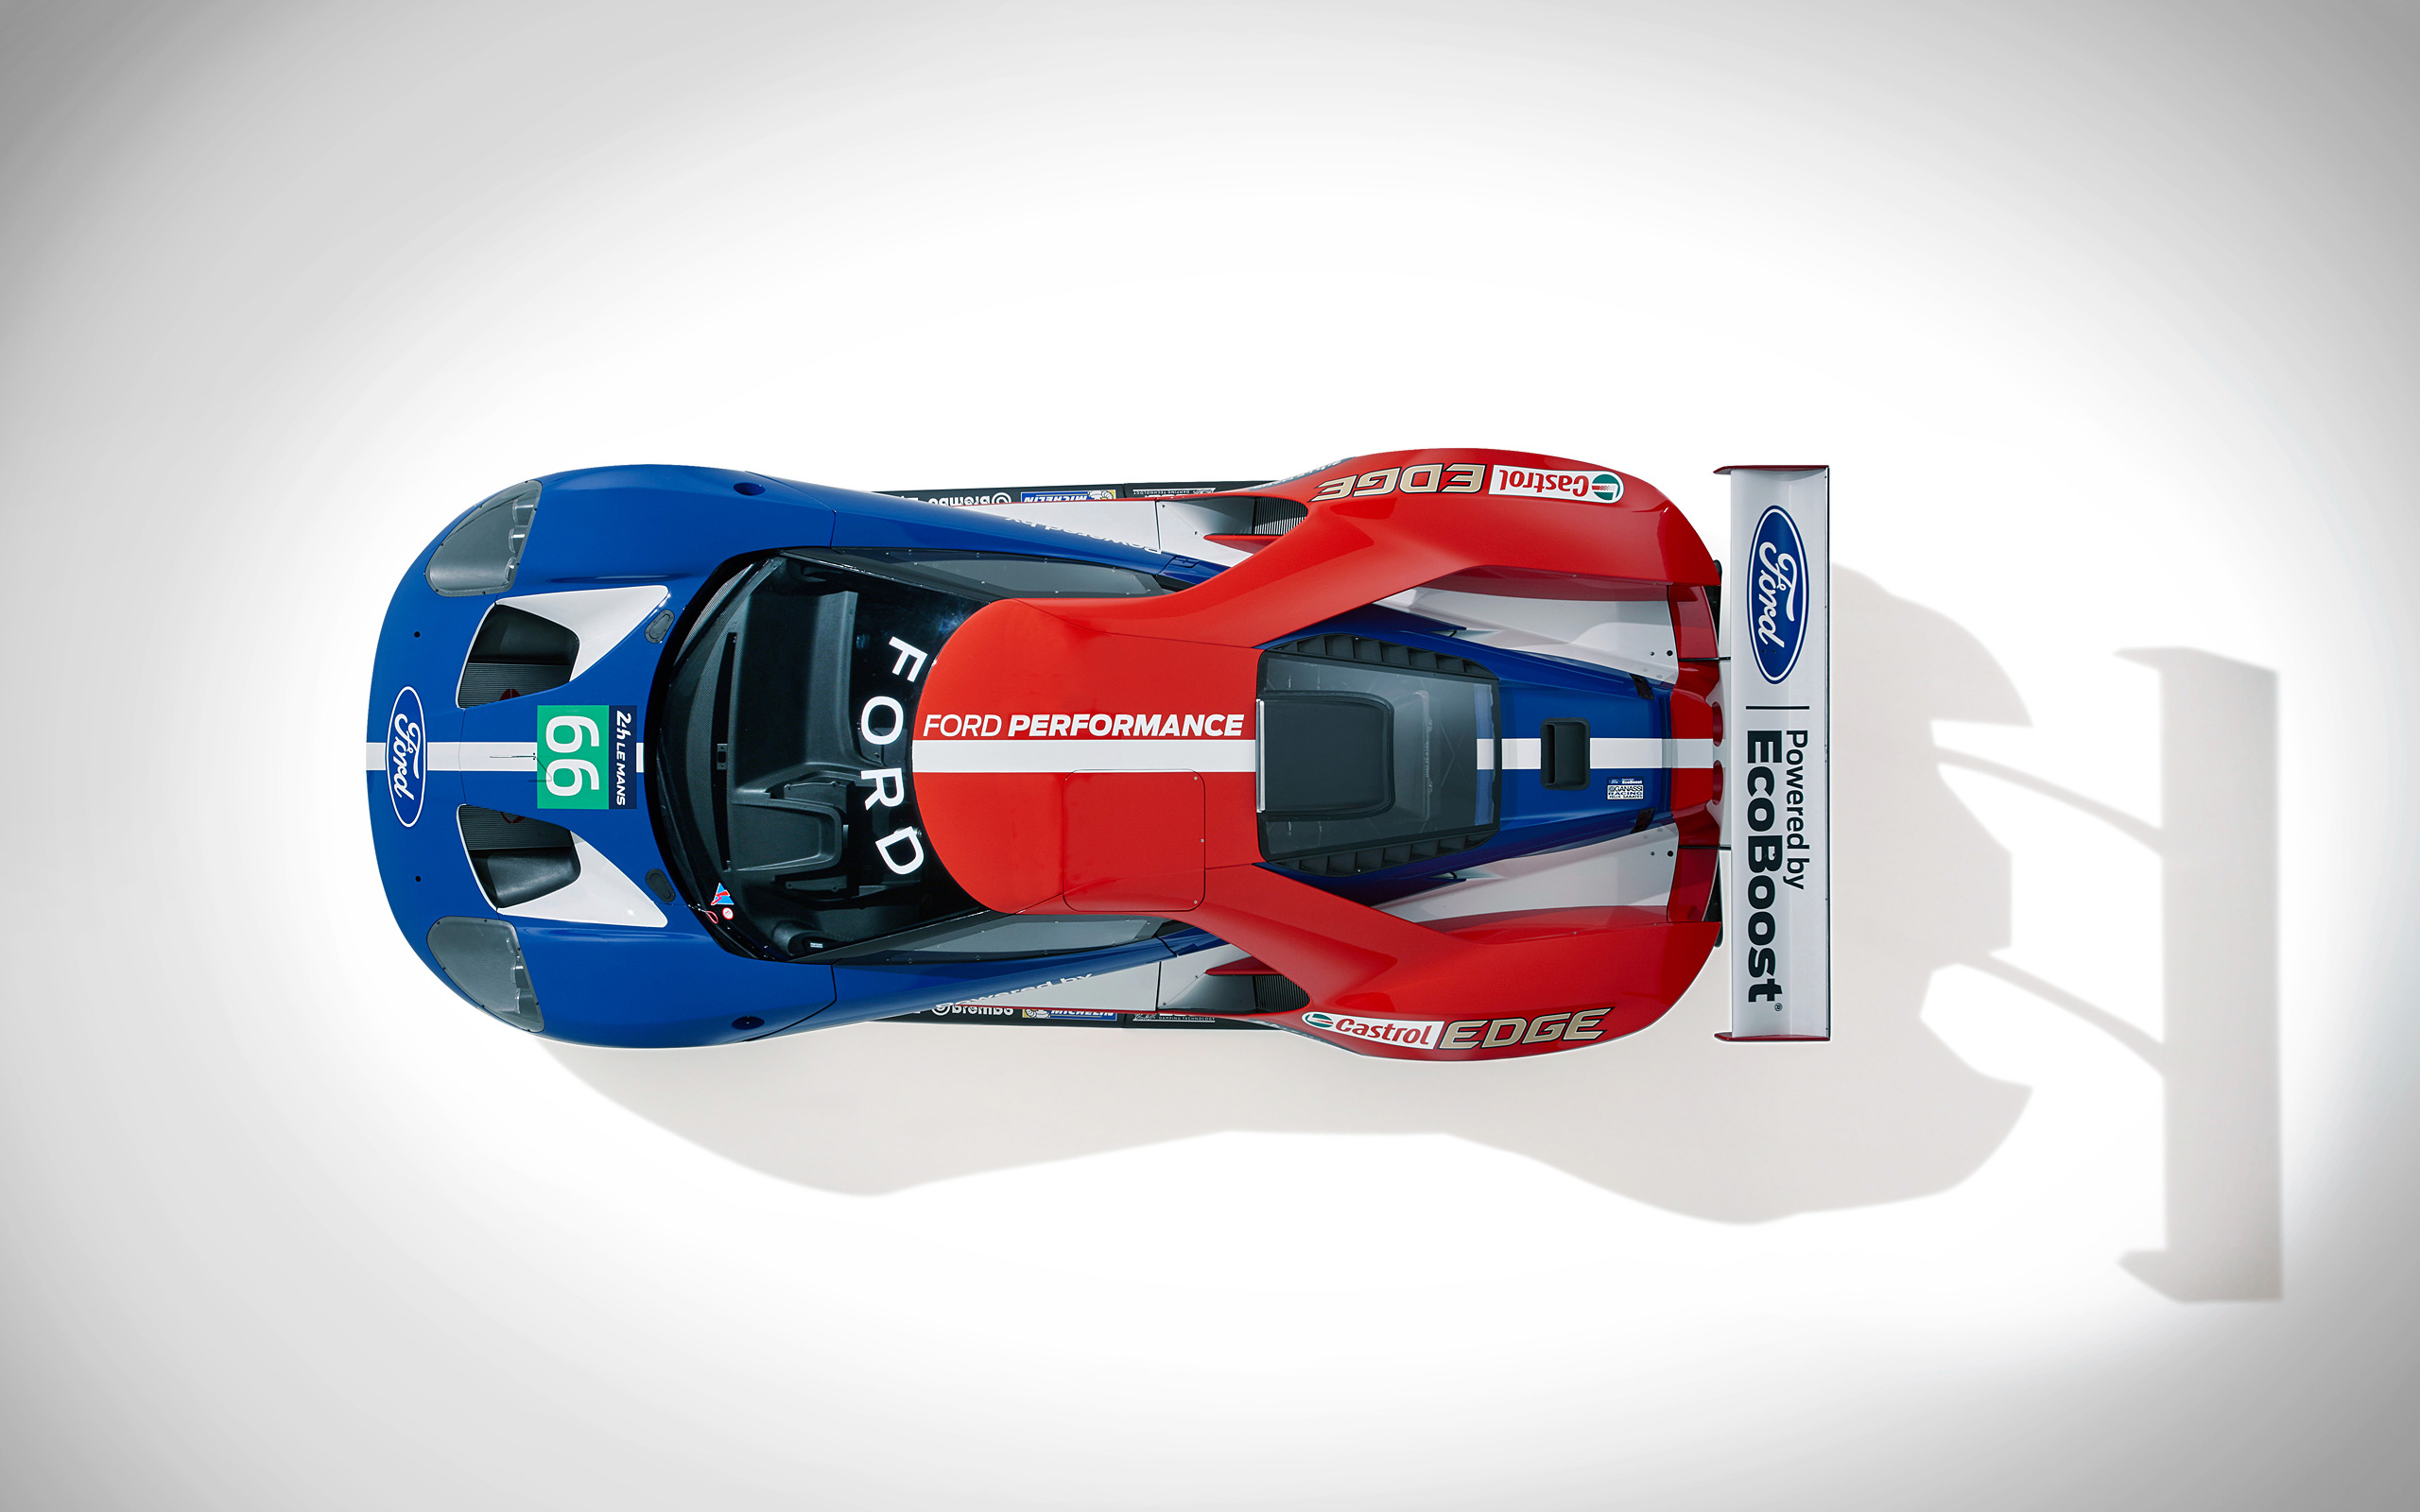  2016 Ford GT Le Mans Racecar Wallpaper.